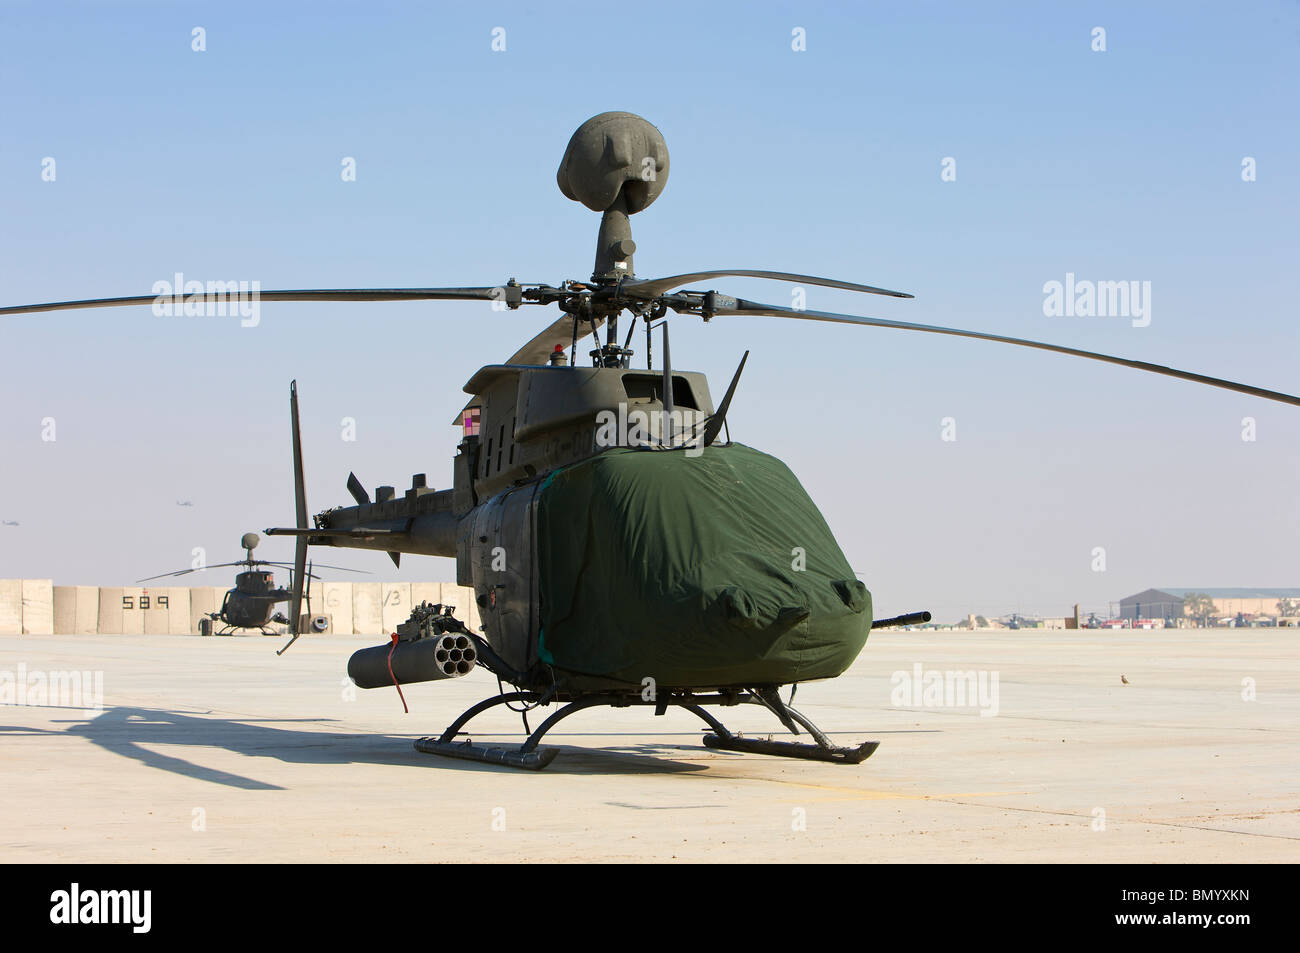 An OH-58D Kiowa Warrior helicopter. Stock Photo